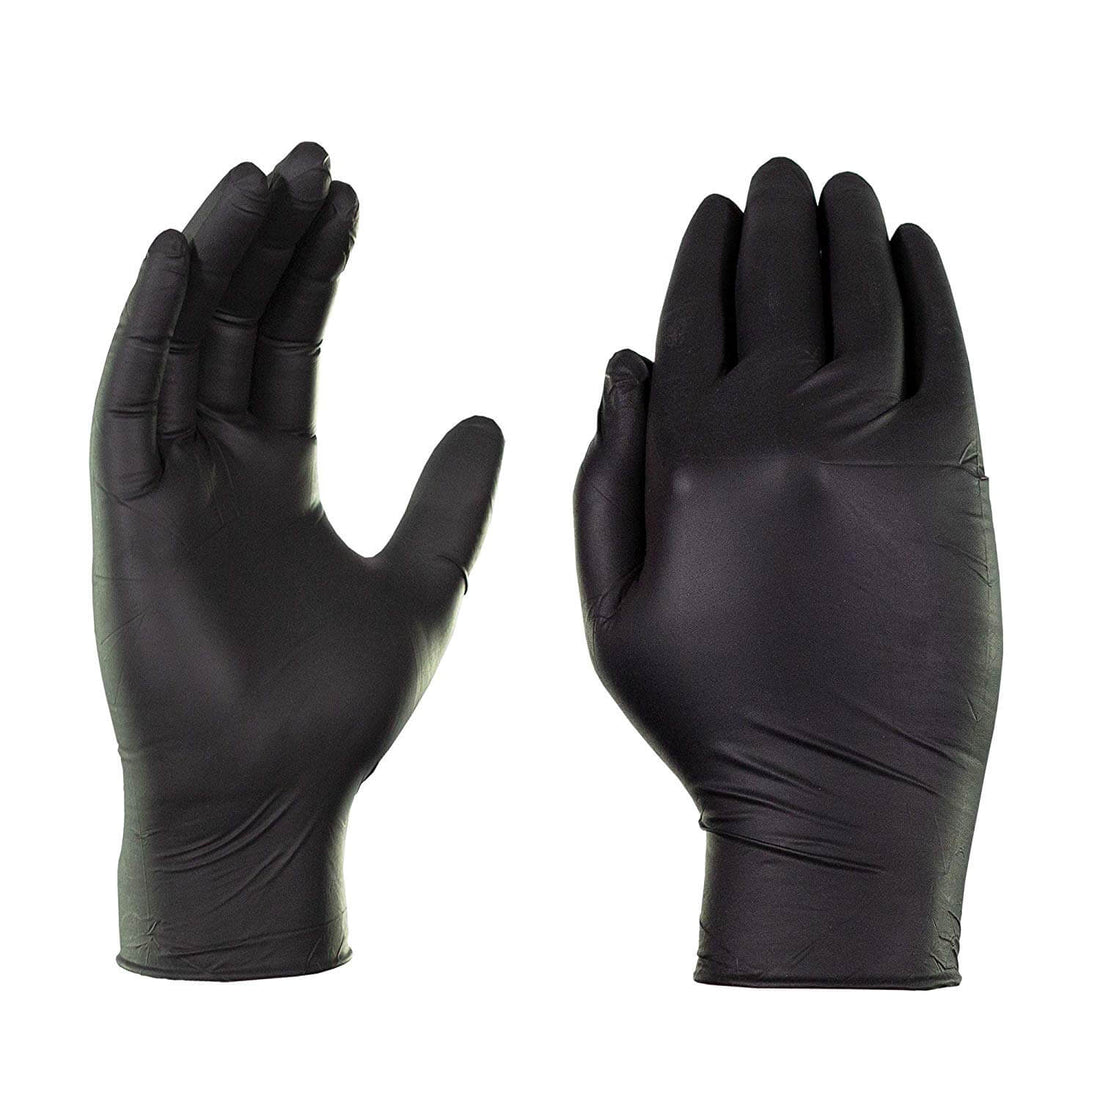 Best Nitrile Gloves